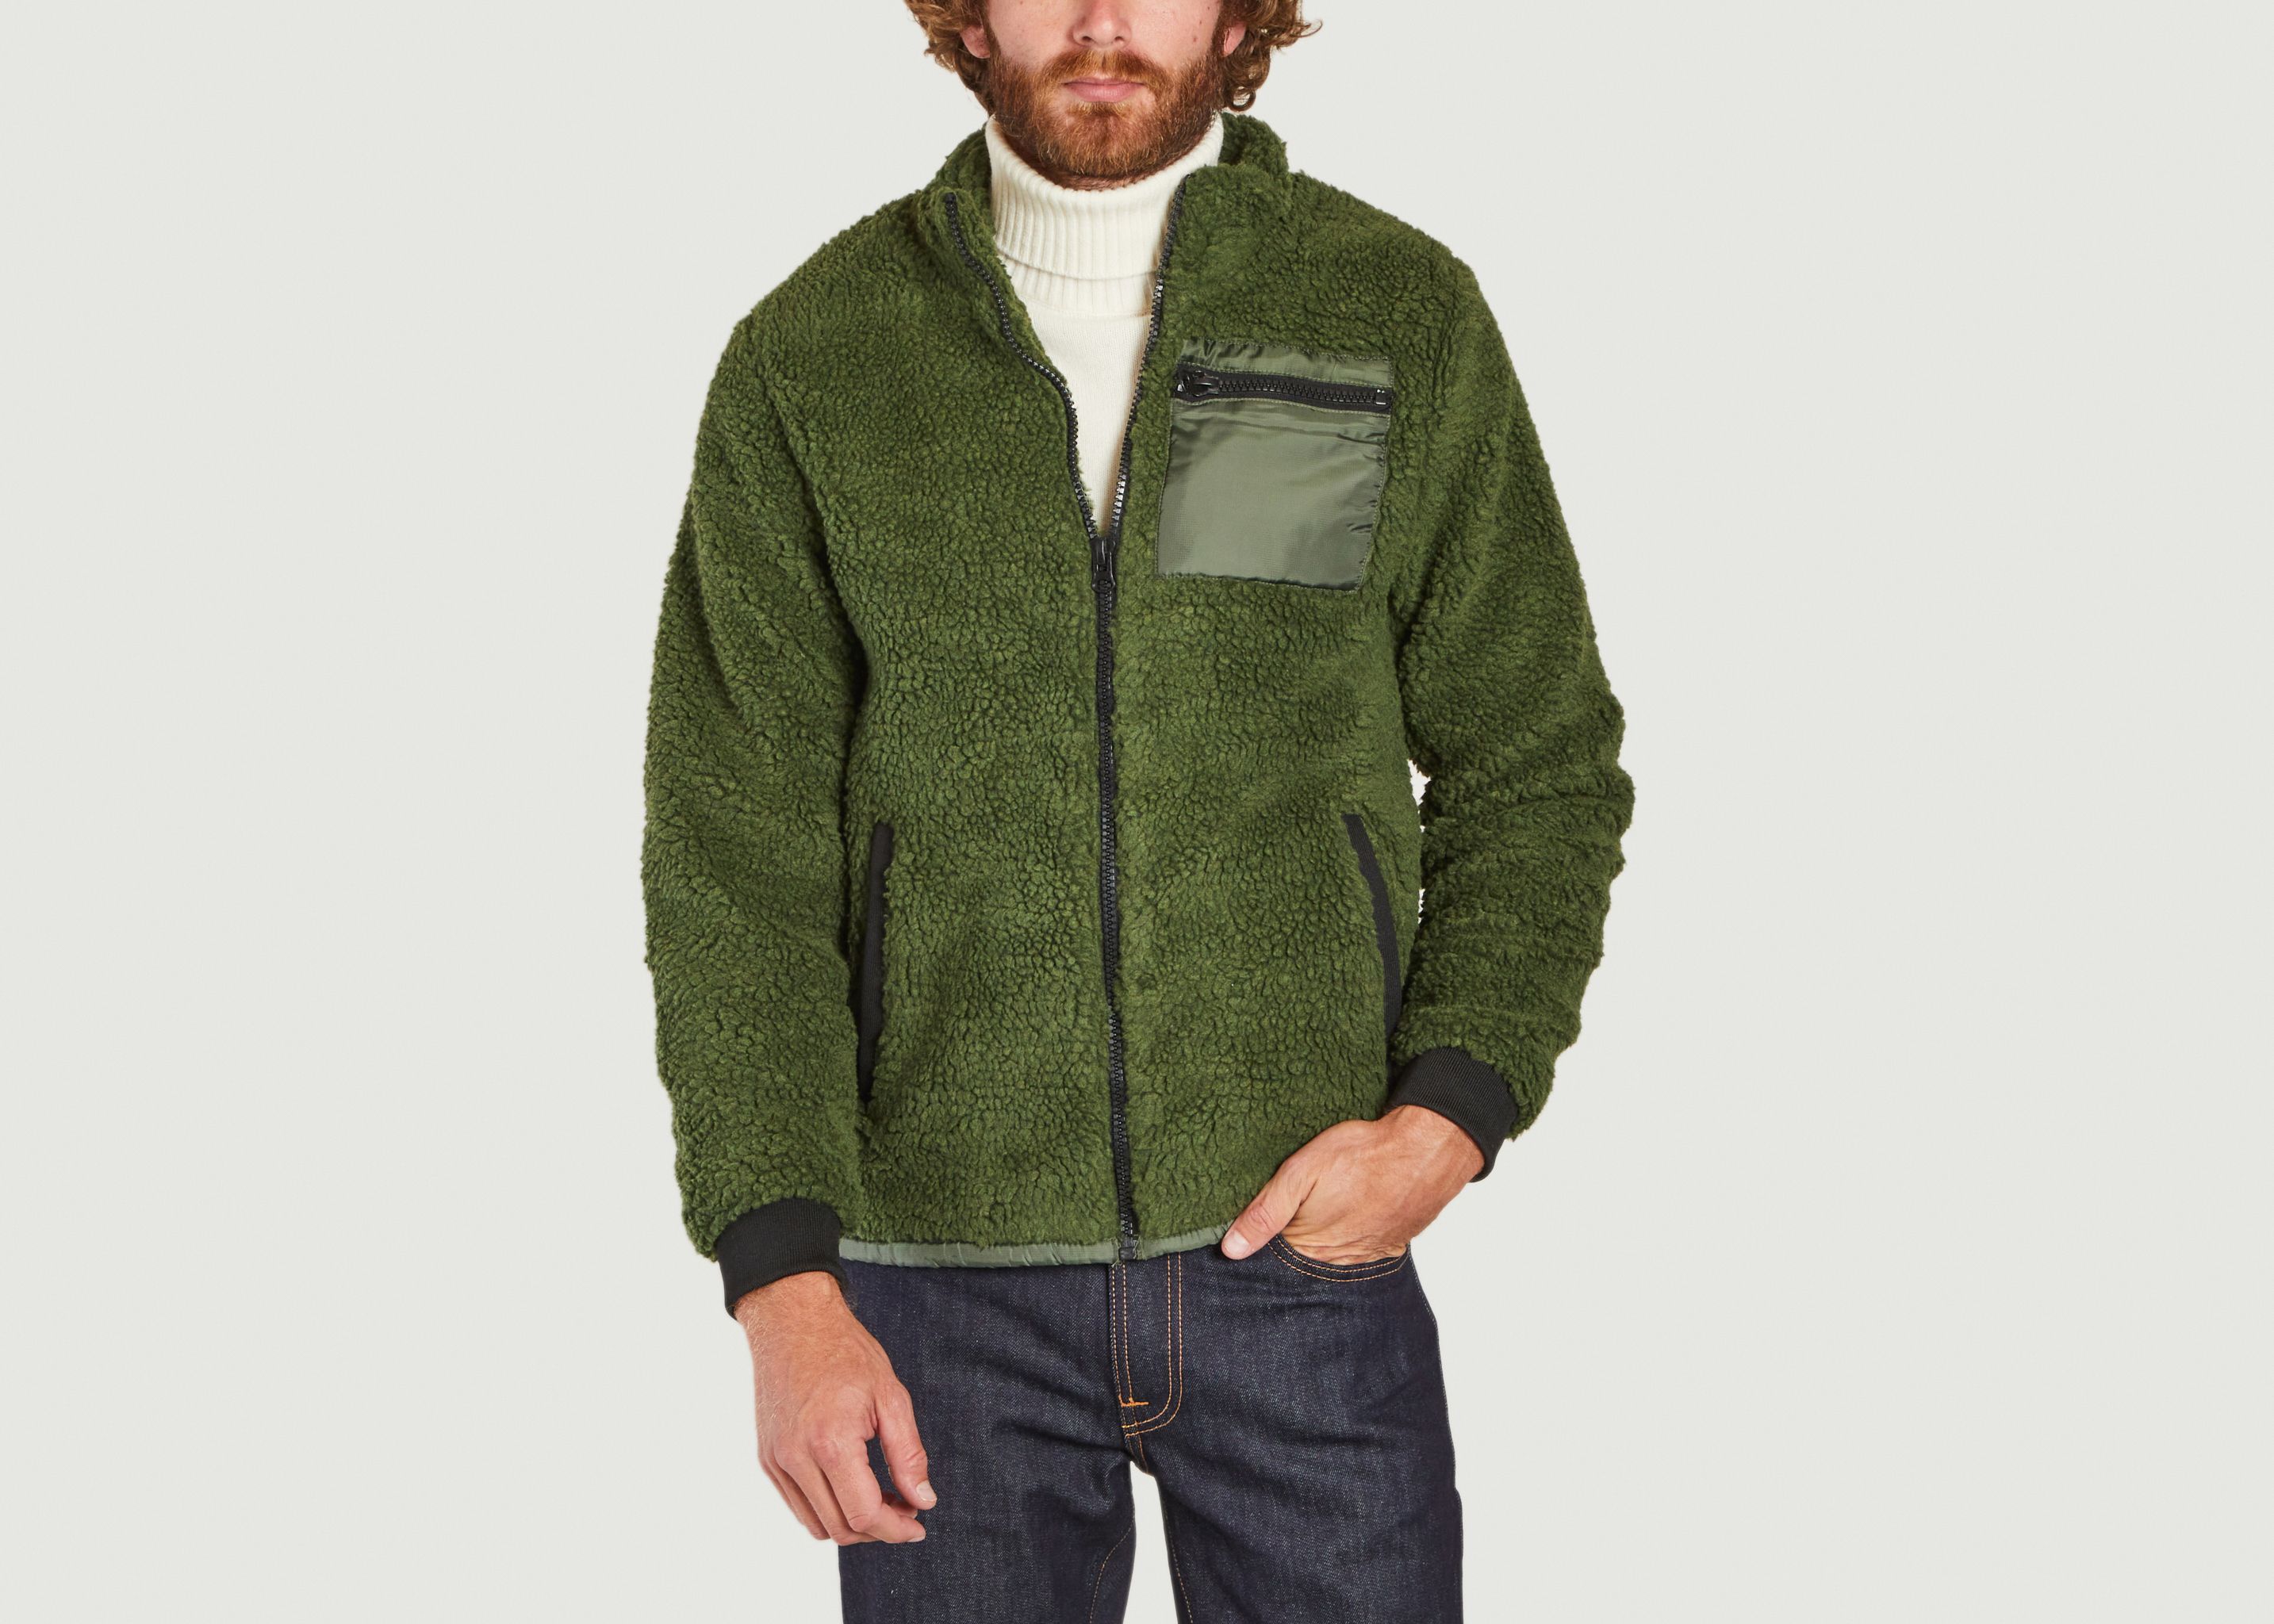 Sofus high collar fleece jacket - SUIT